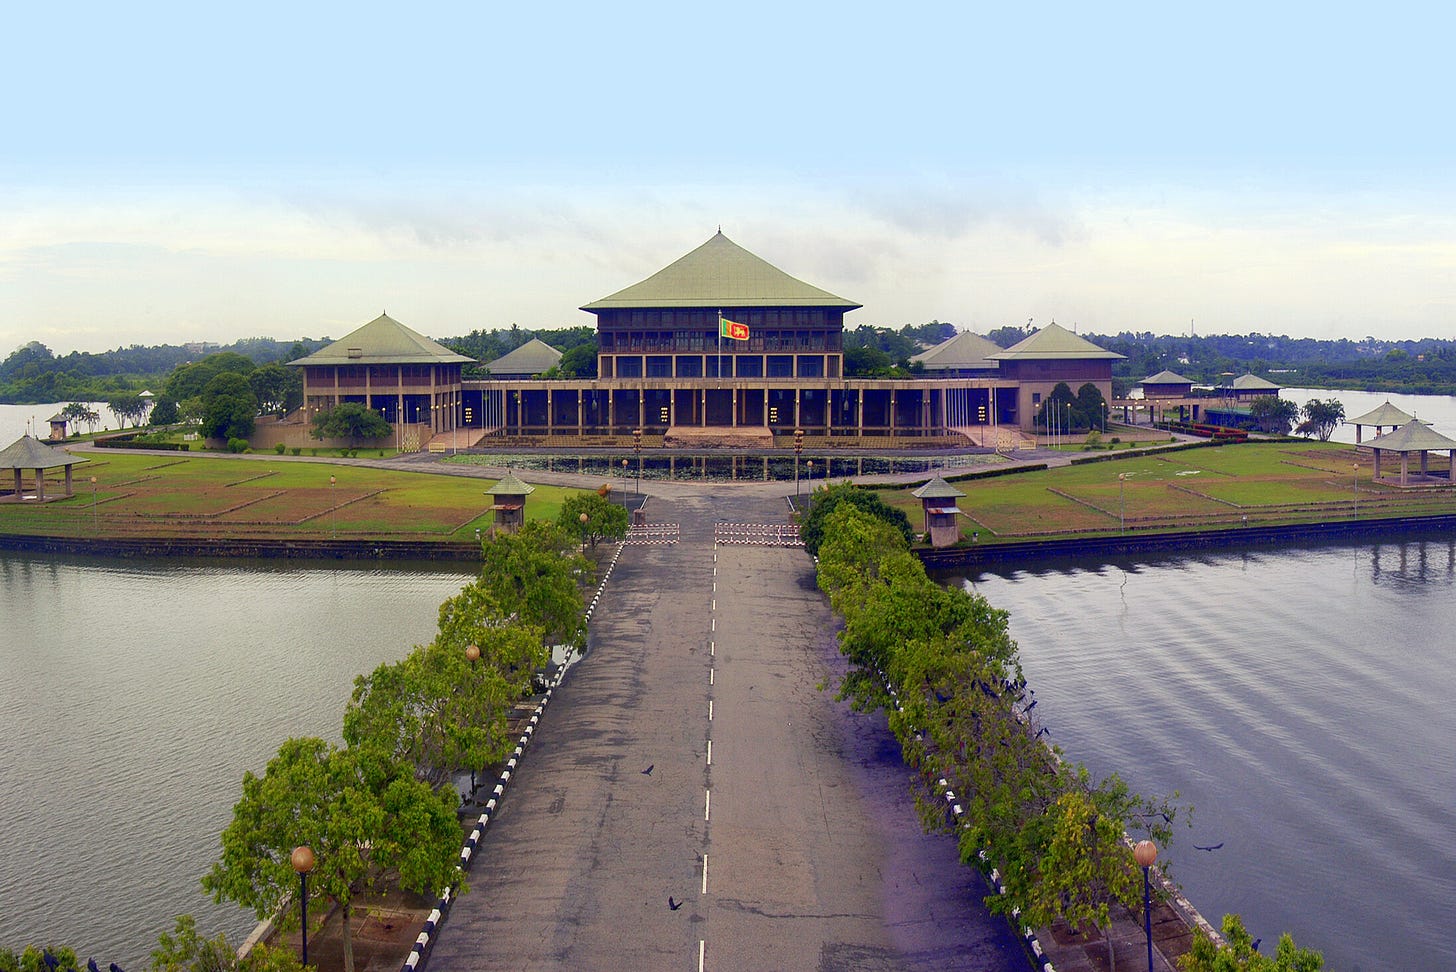 Parliament of Sri Lanka on an island                                                                                                      Image Source